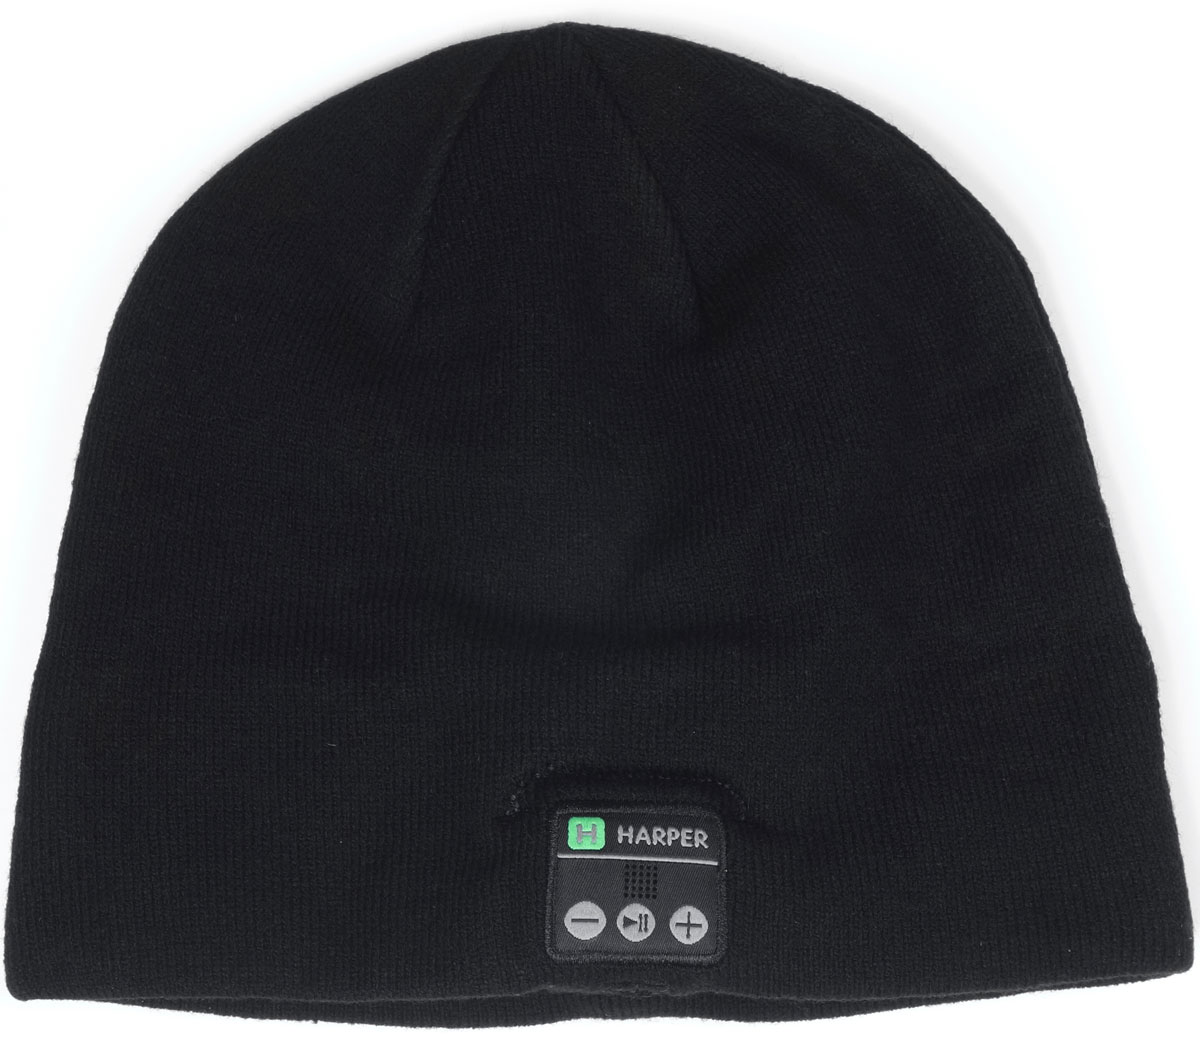 Harper HB-505, Black шапка с Bluetooth-гарнитурой